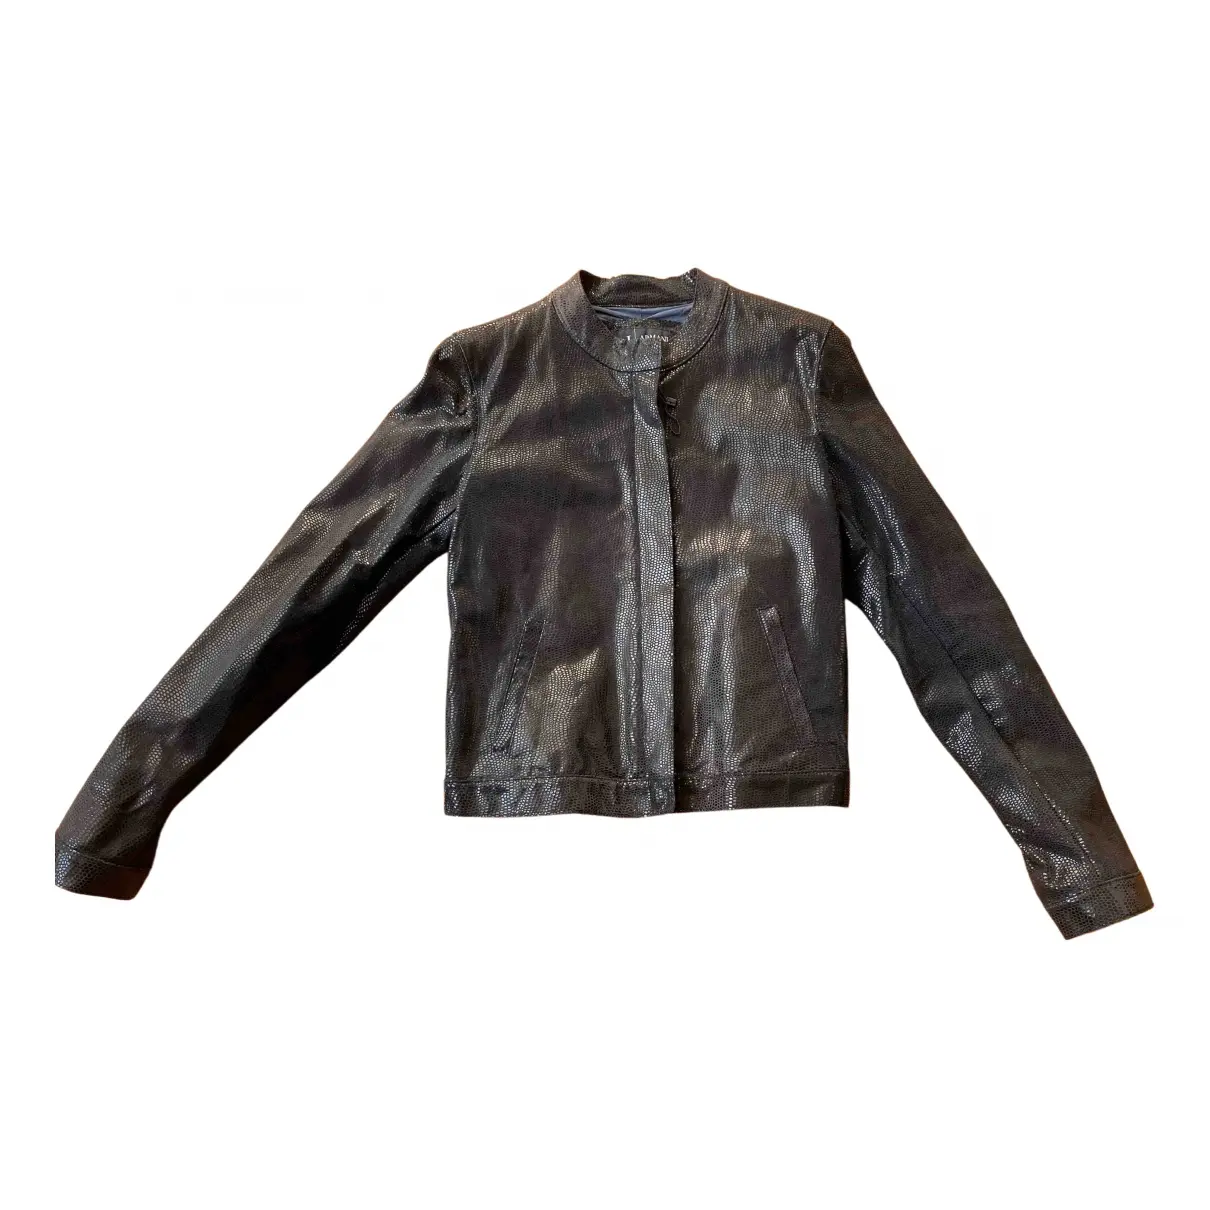 Leather biker jacket Armani Jeans